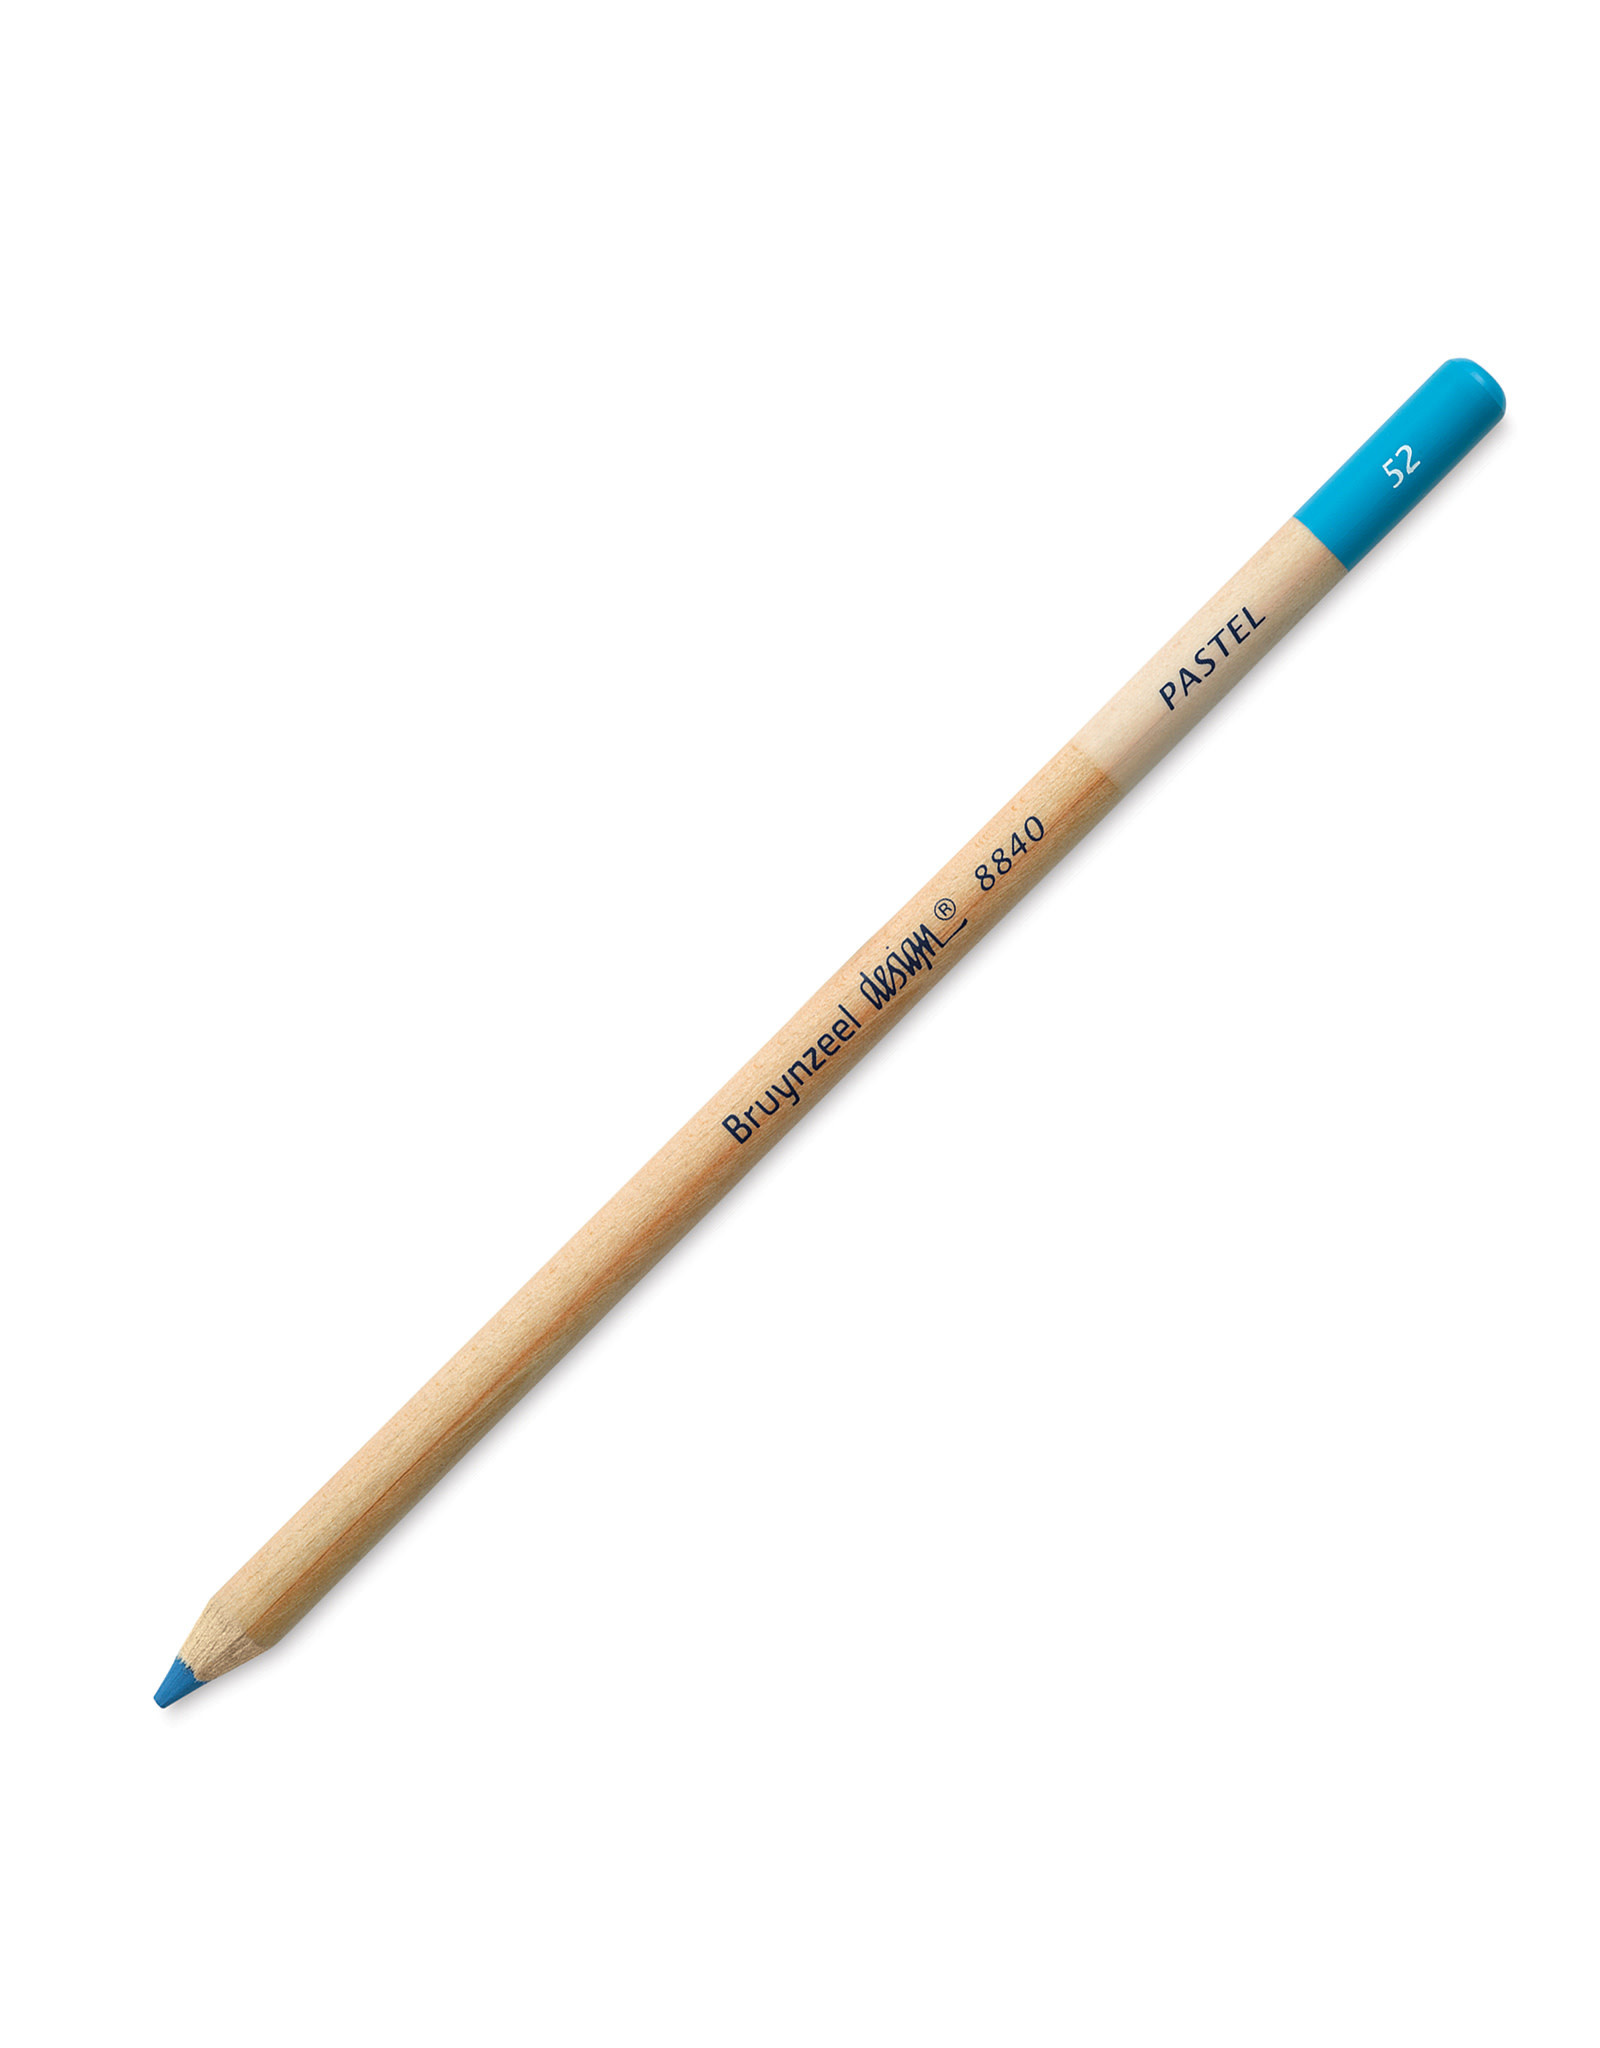 Royal Talens Bruynzeel Design Pastel Pencil, Turquoise Blue